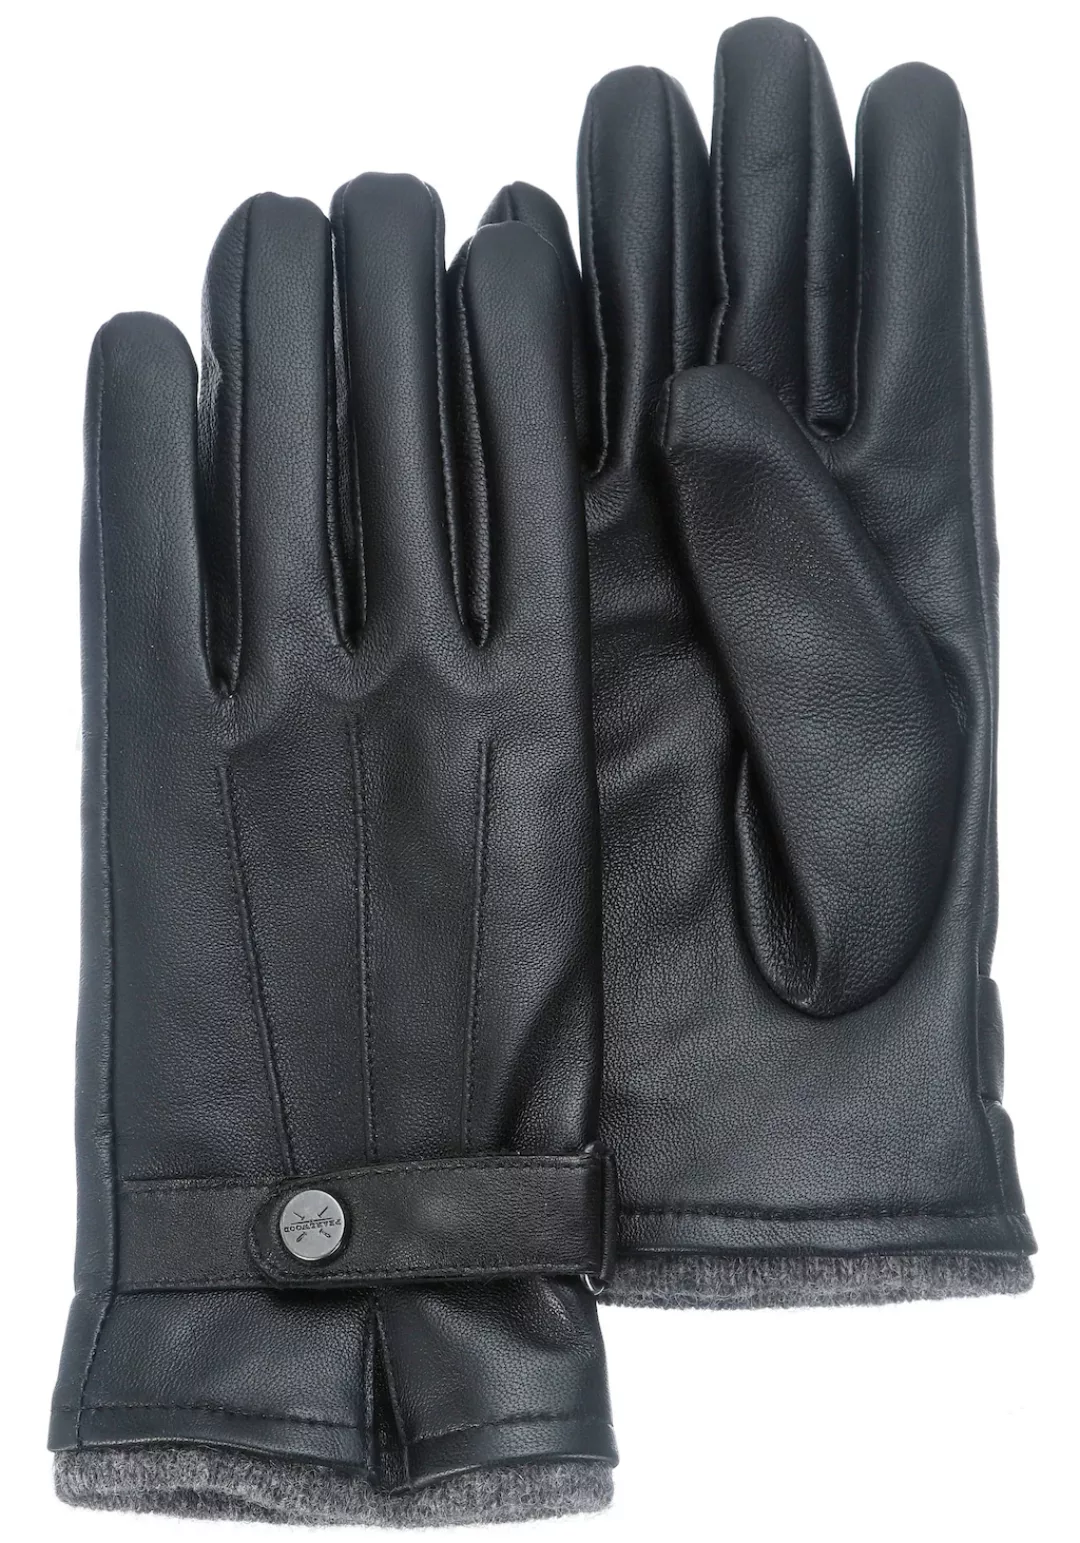 PEARLWOOD Lederhandschuhe, Touchscreen proofed - mit 10 Fingern bedienbar günstig online kaufen